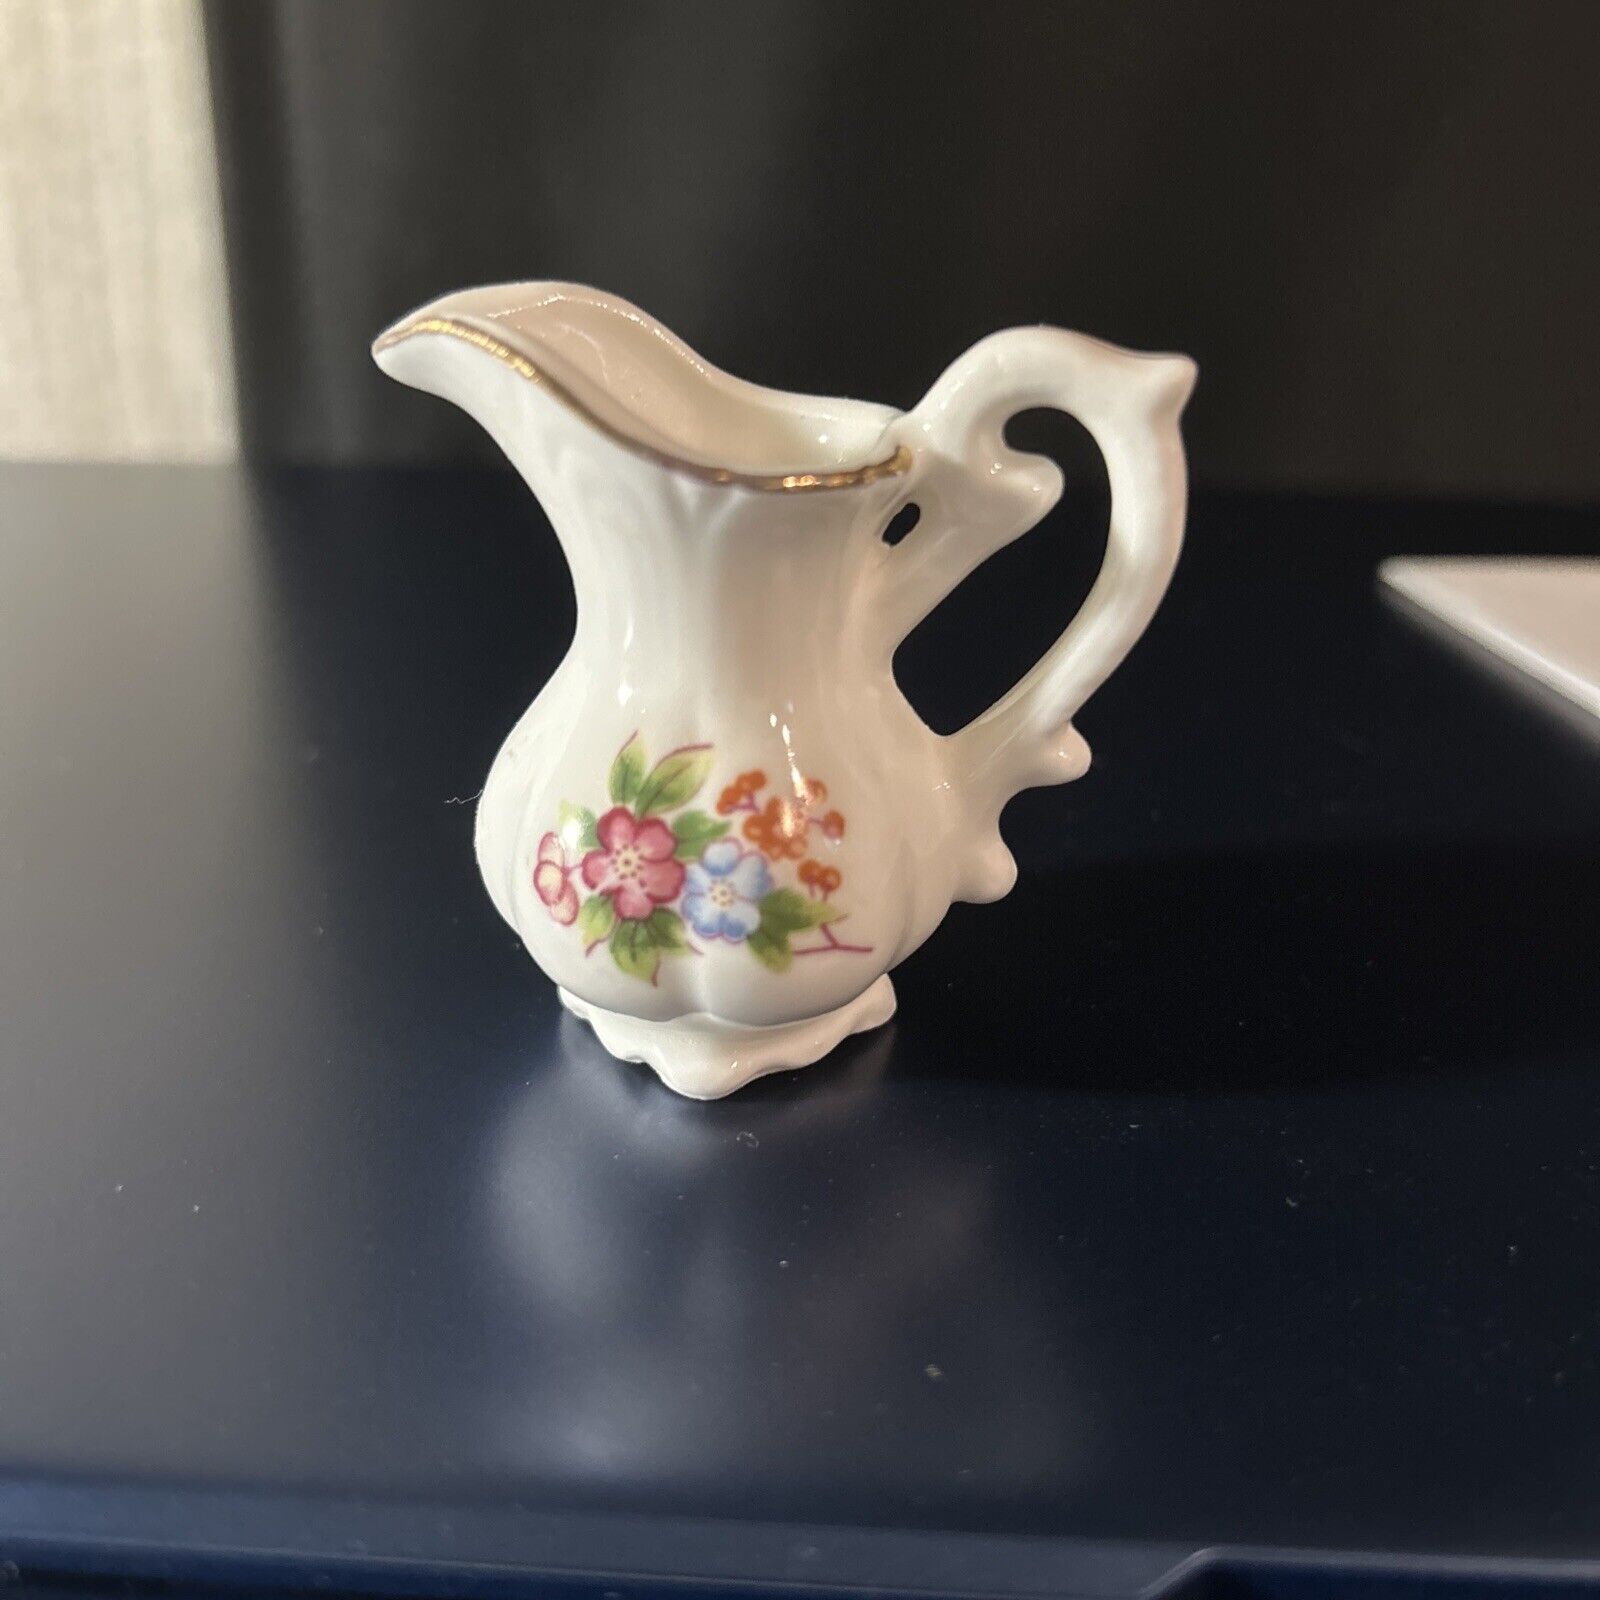 2” Vintage Pitcher  Small Miniature Sizes Flower Designs Dollhouse